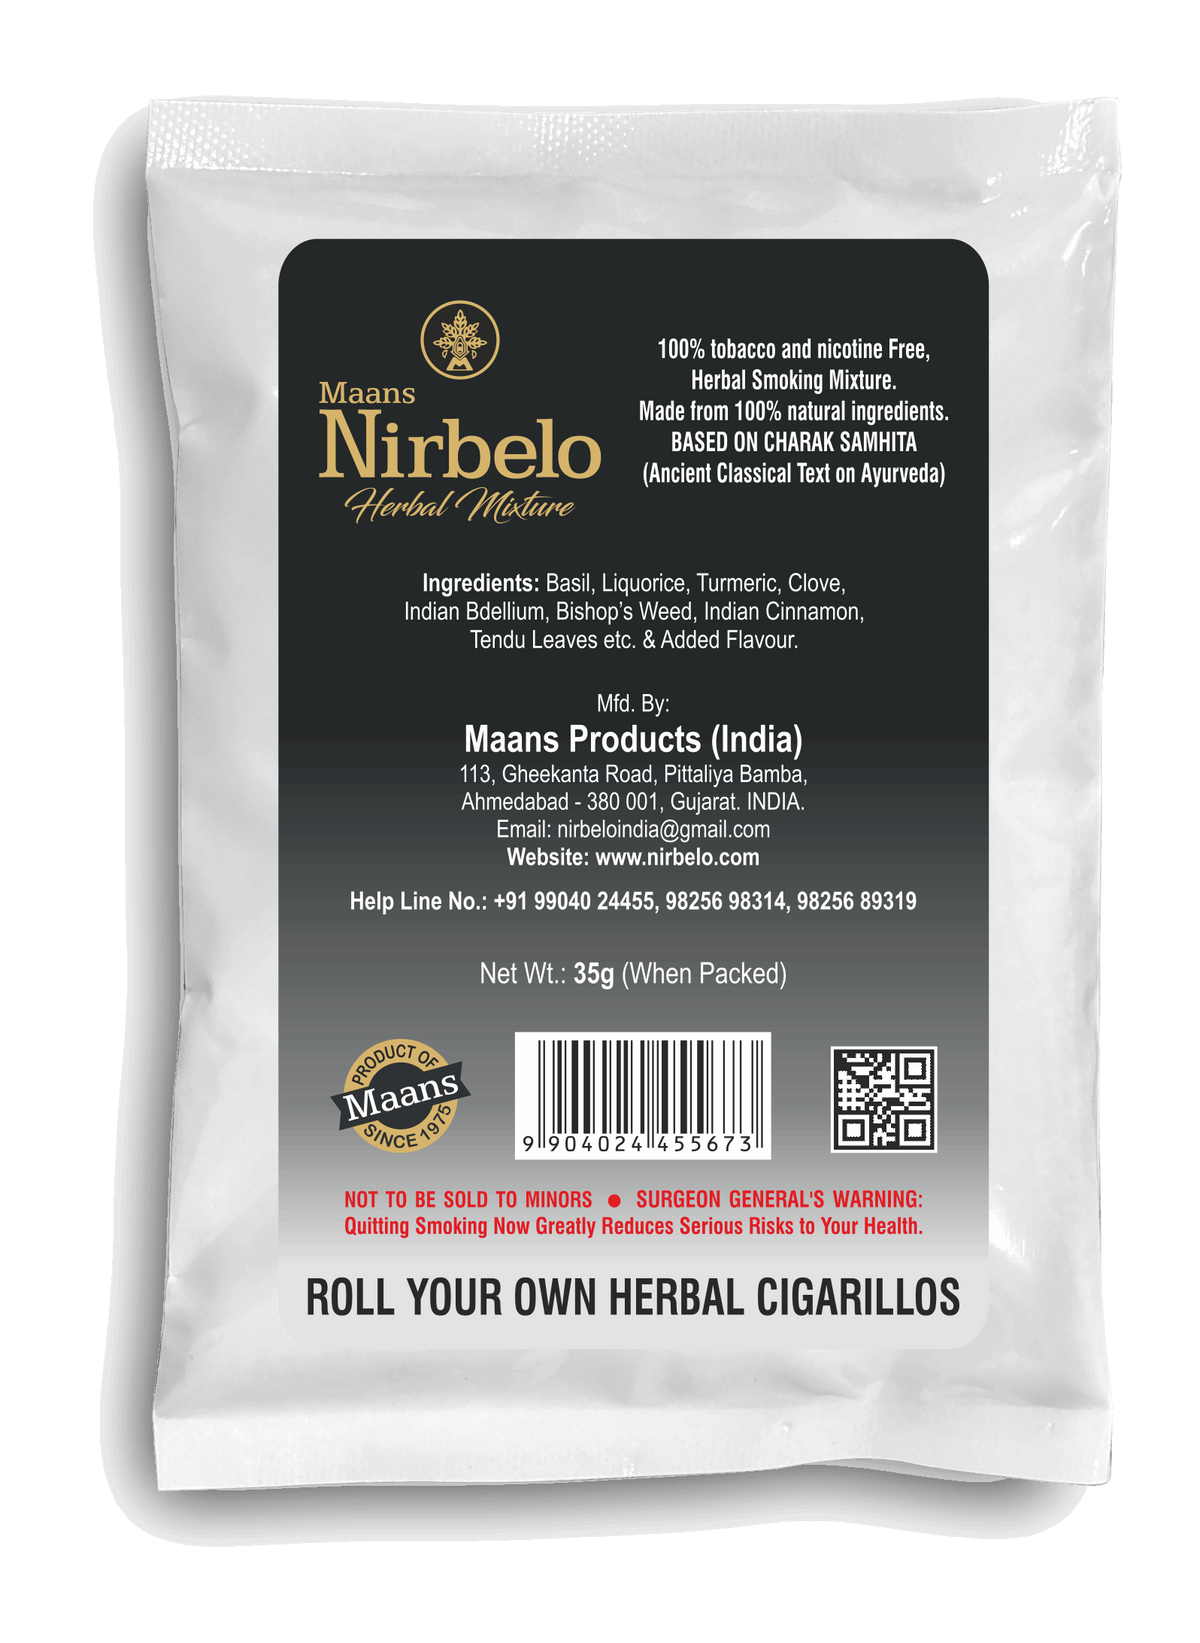 Nirbelo Herbal Raw Mixture Premium Flavor 100% Tobacco Free & Nicotine Free Natural Organic Ingredients for Quit Smoking & Nature's Alternative to Tobacco